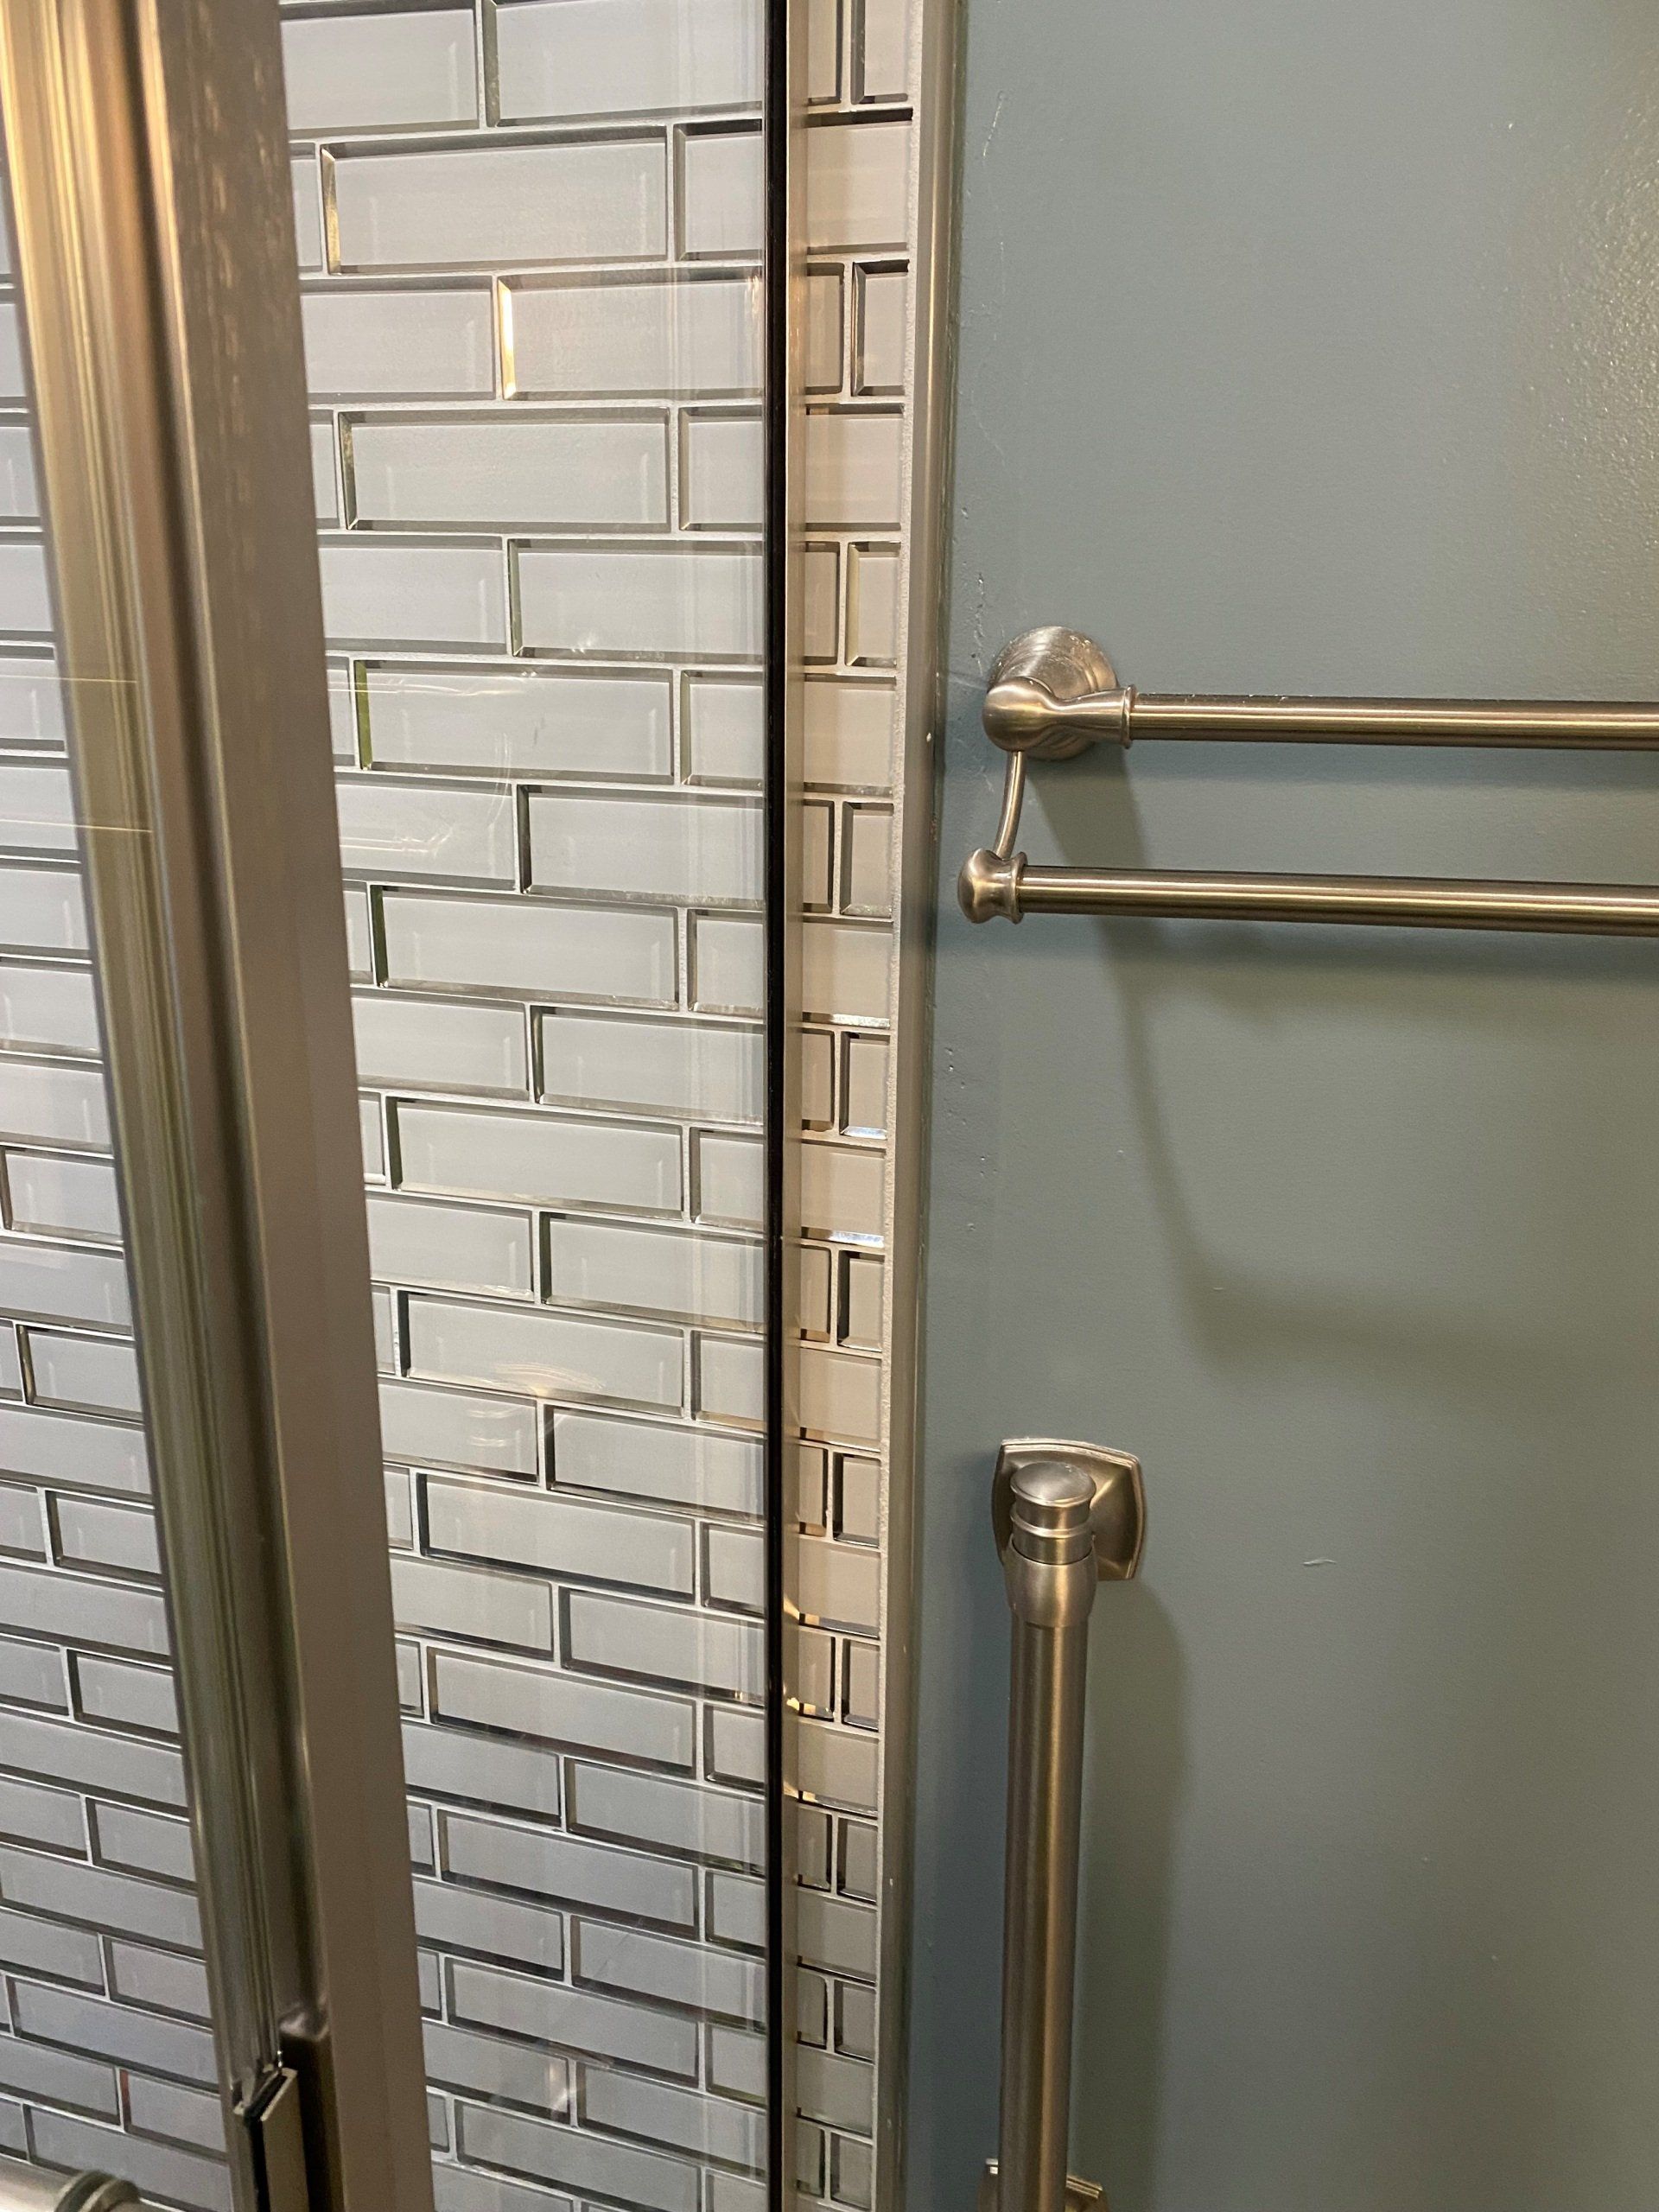 edge tile work to wall white tile glass doors